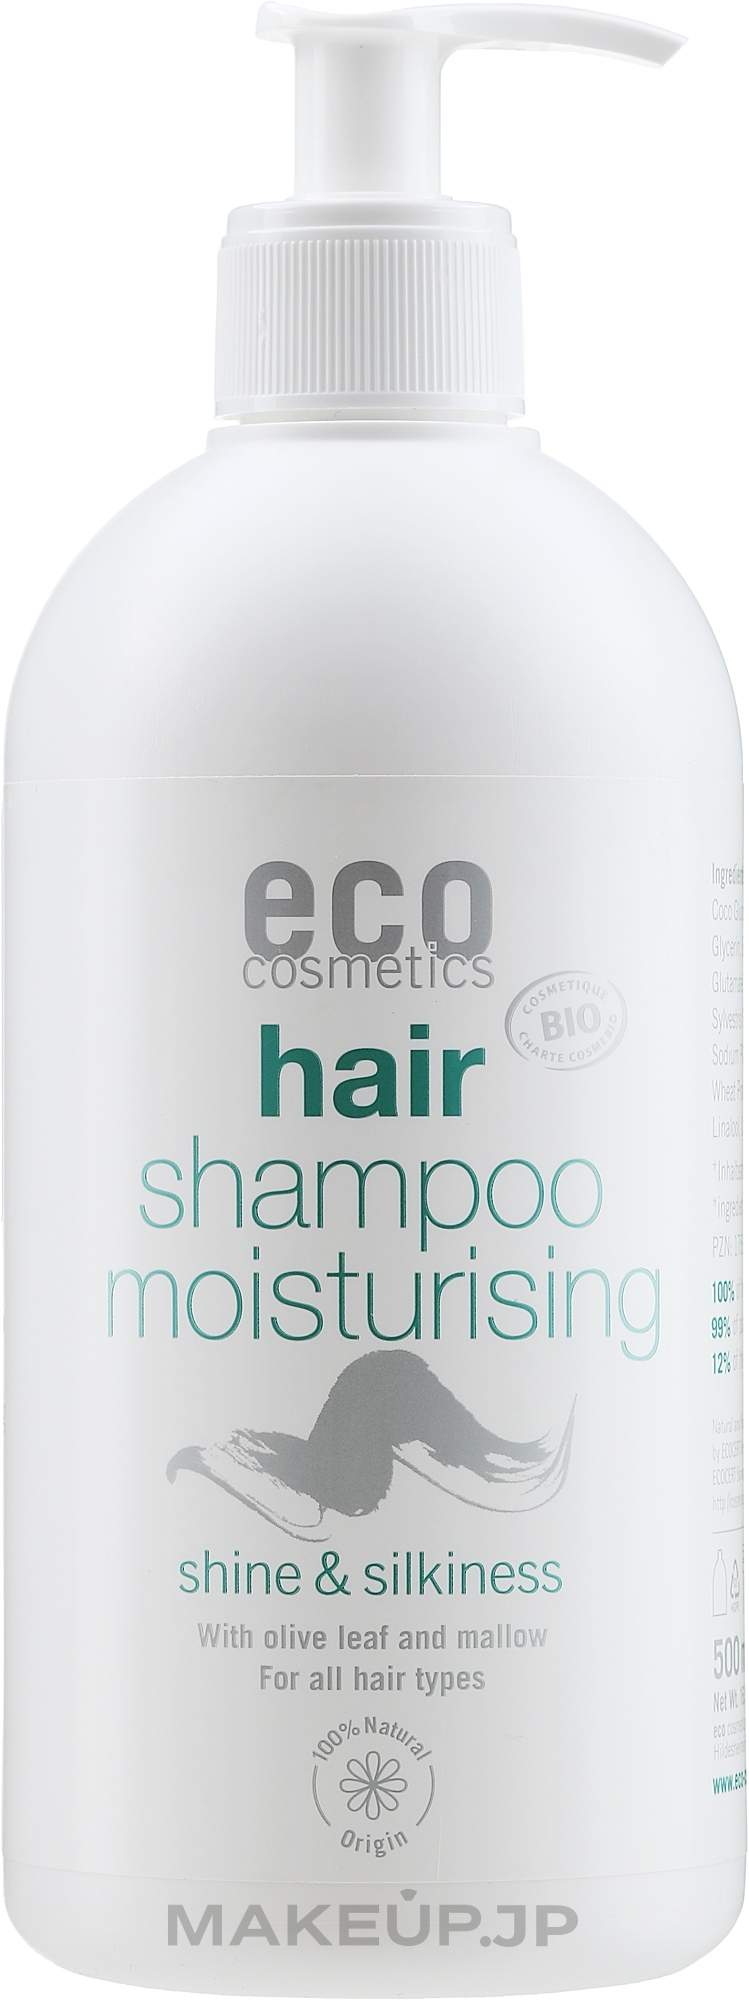 Moisturizing Olive & Mallow Shampoo with Dispenser - Eco Cosmetics Hair Shampoo Moisturising Shine & Silkiness — photo 500 ml